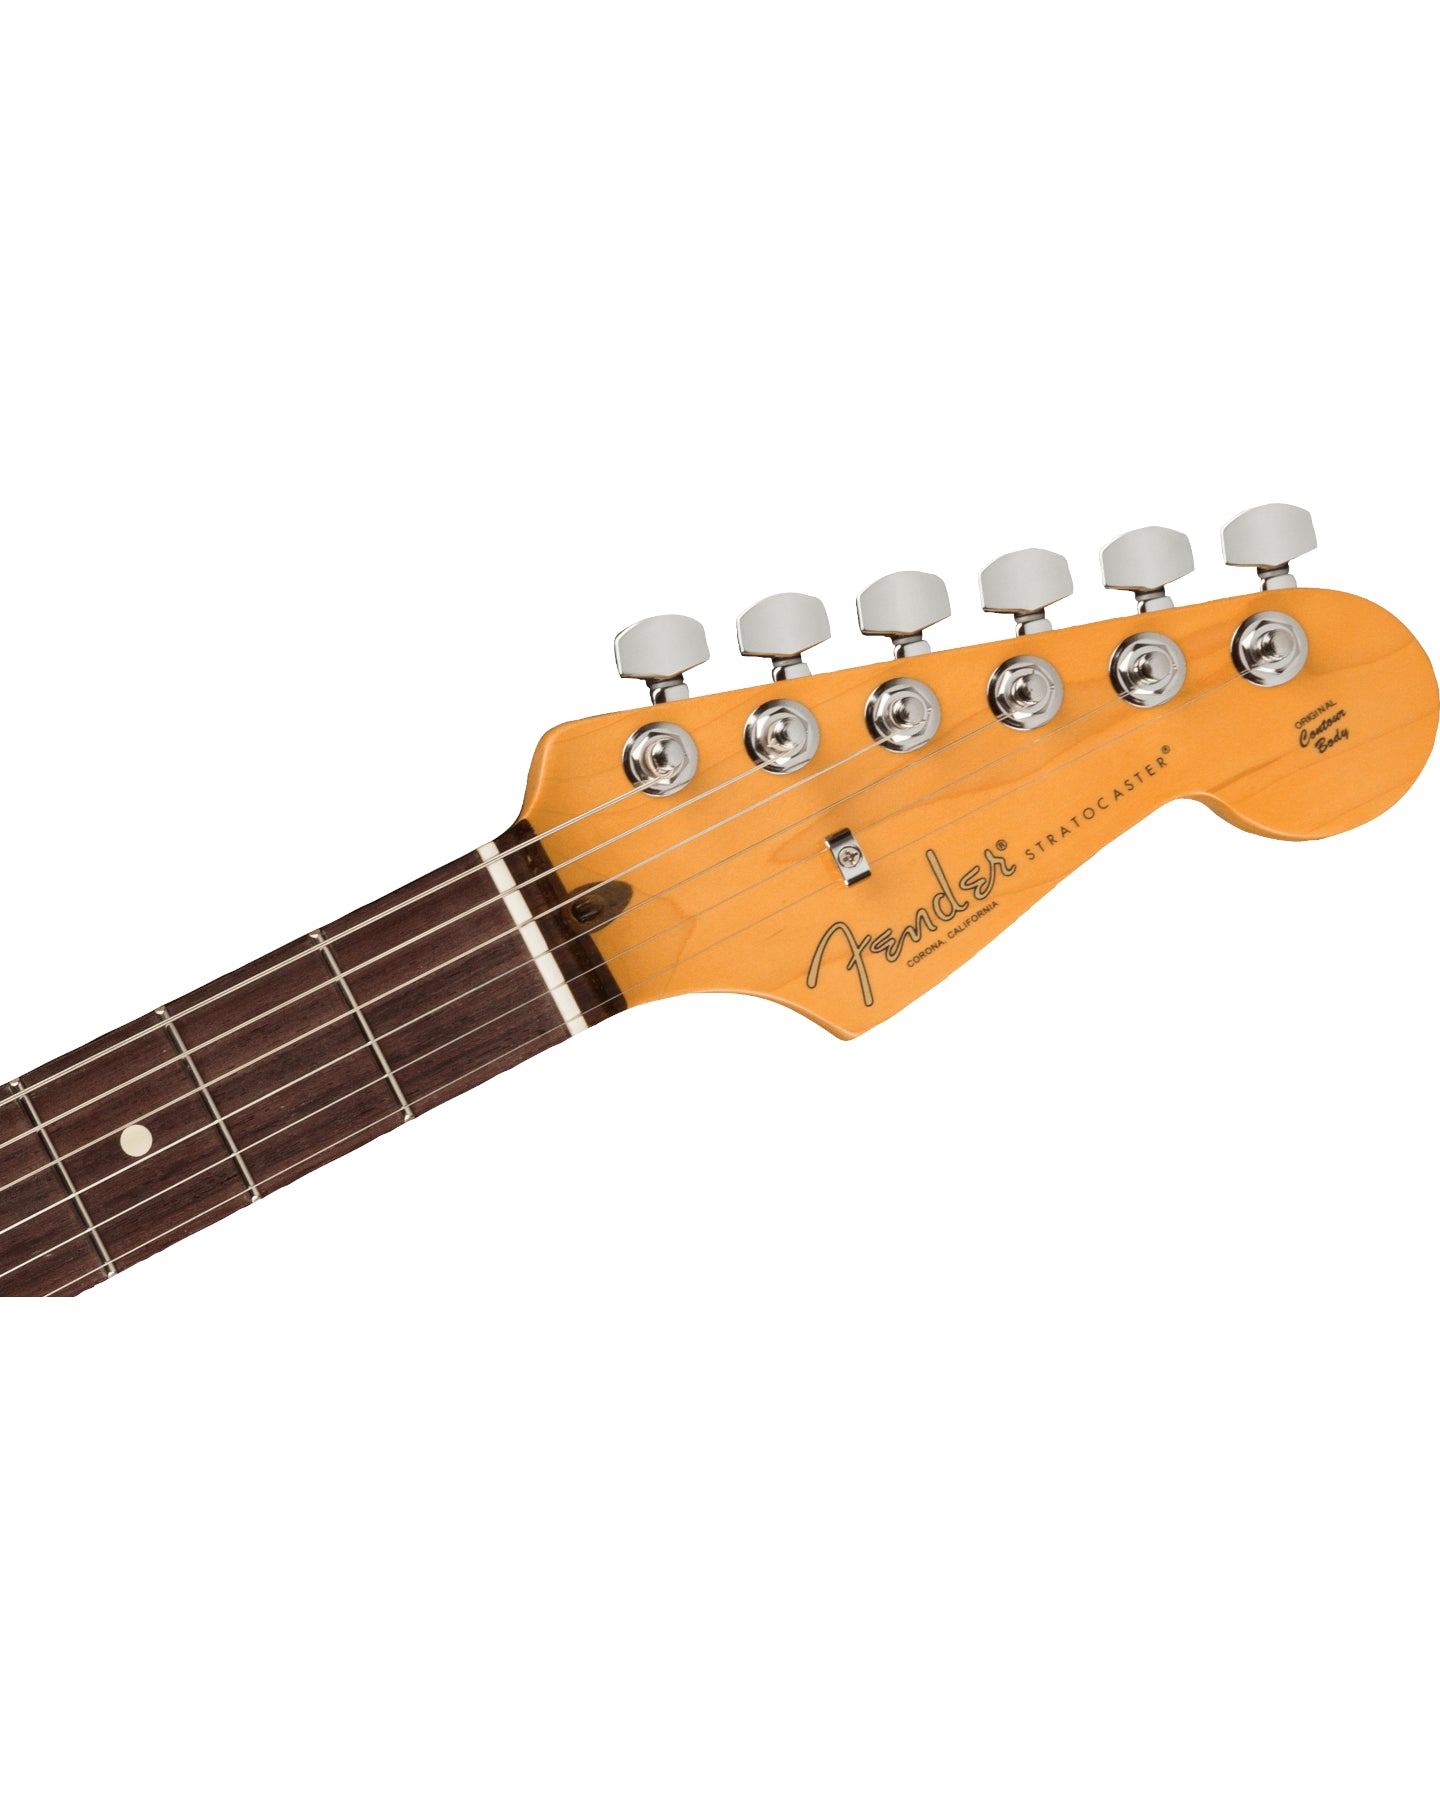 American Professional II Stratocaster, Mercury , RW FB